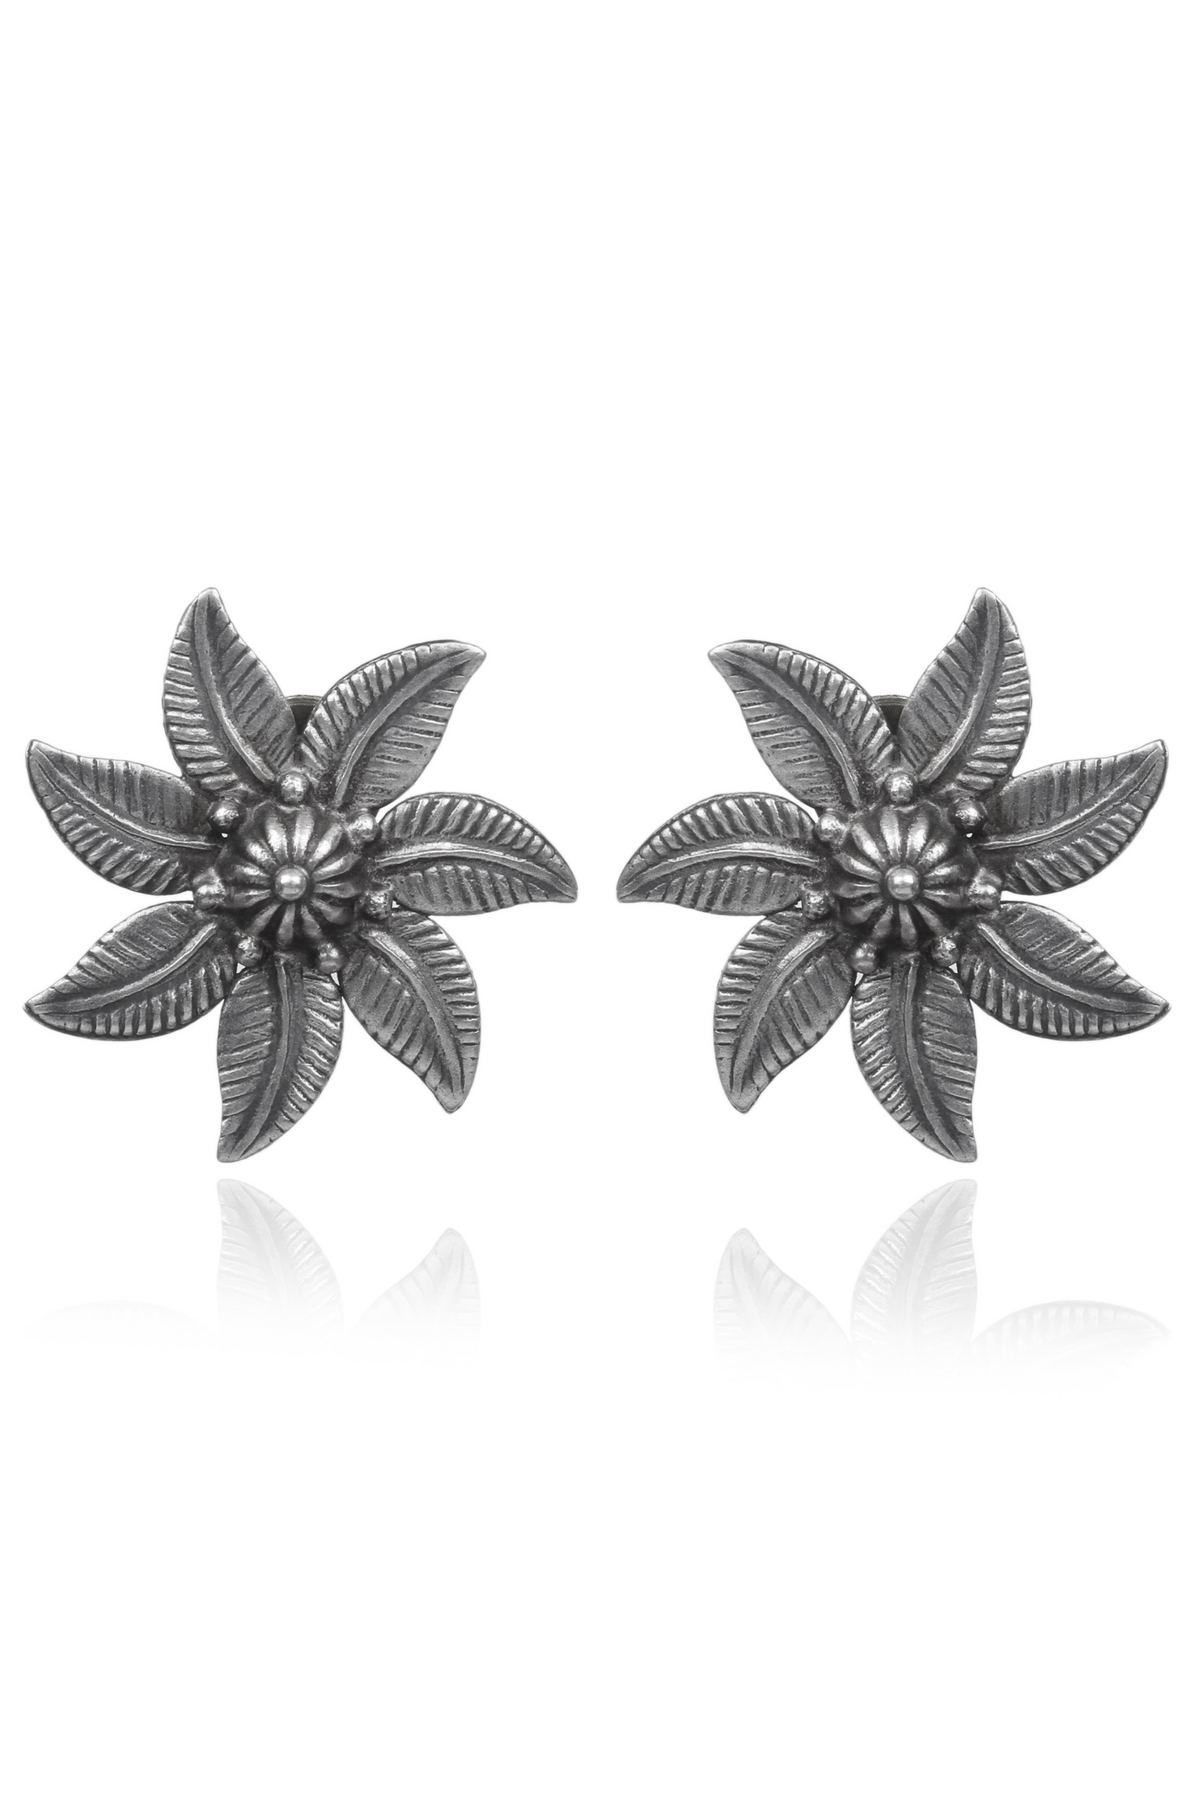 Jannat Silver Floral Earrings